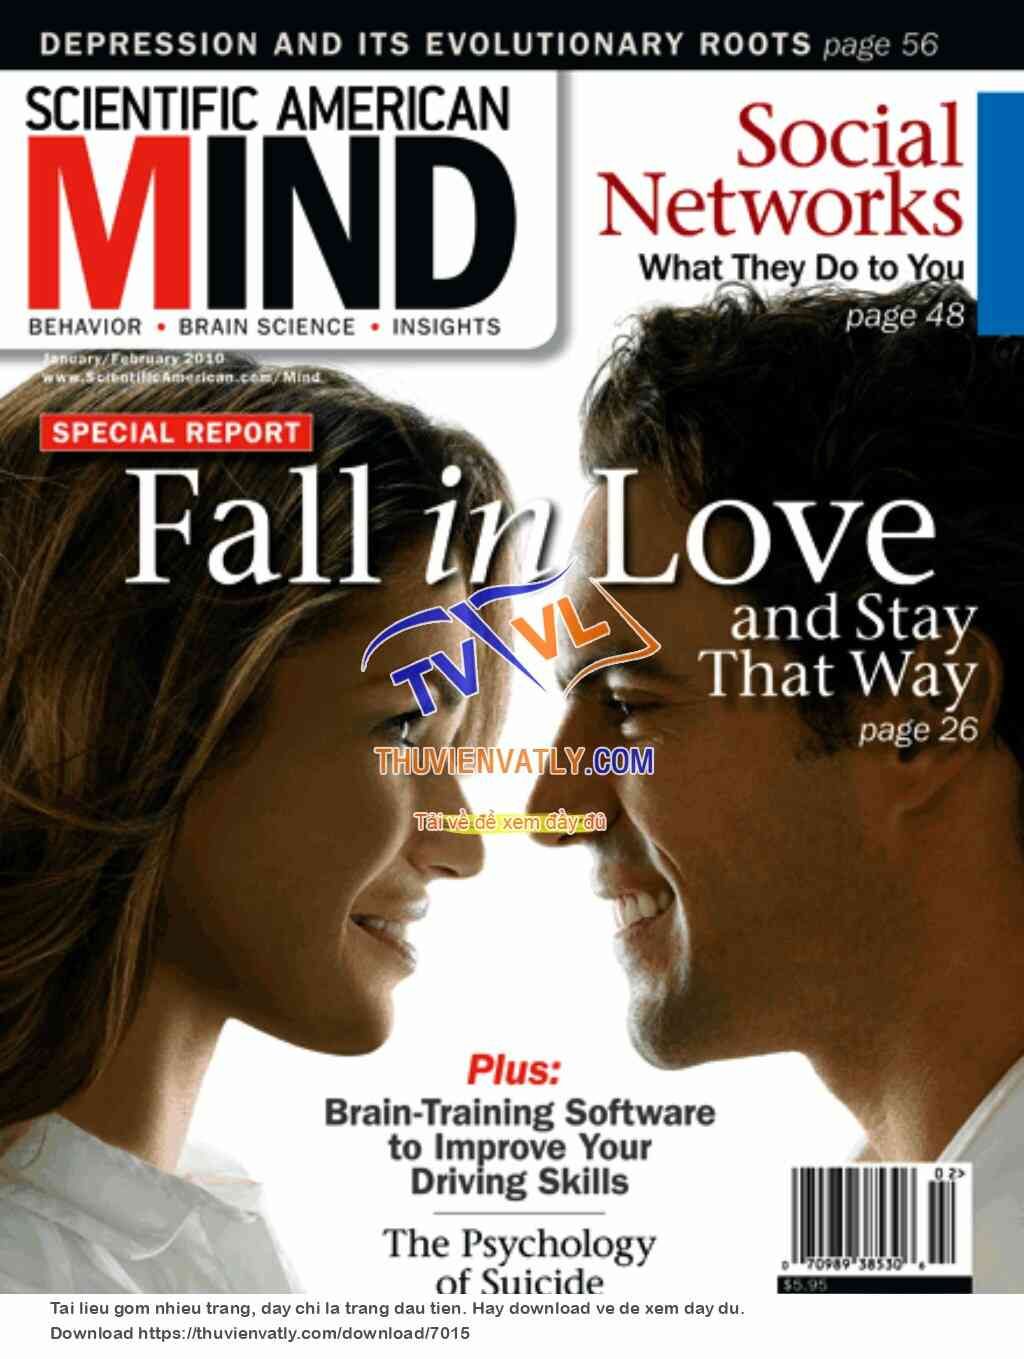 Scientific-American Mind, Jan-Feb 2010